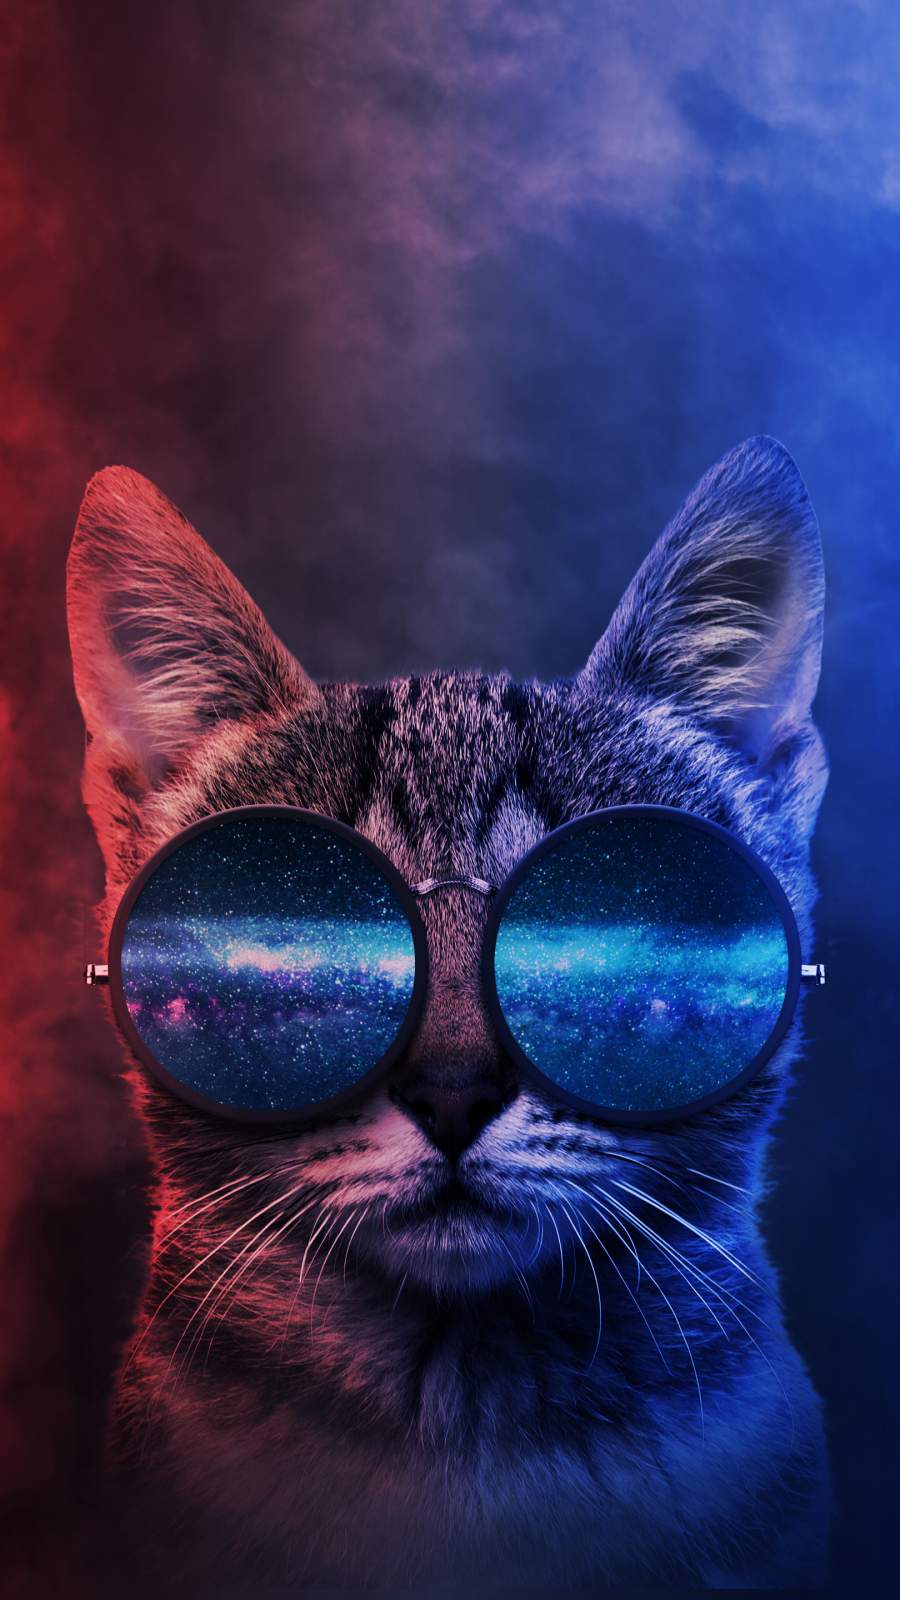 Cool Cat iPhone Wallpaper - iPhone Wallpapers